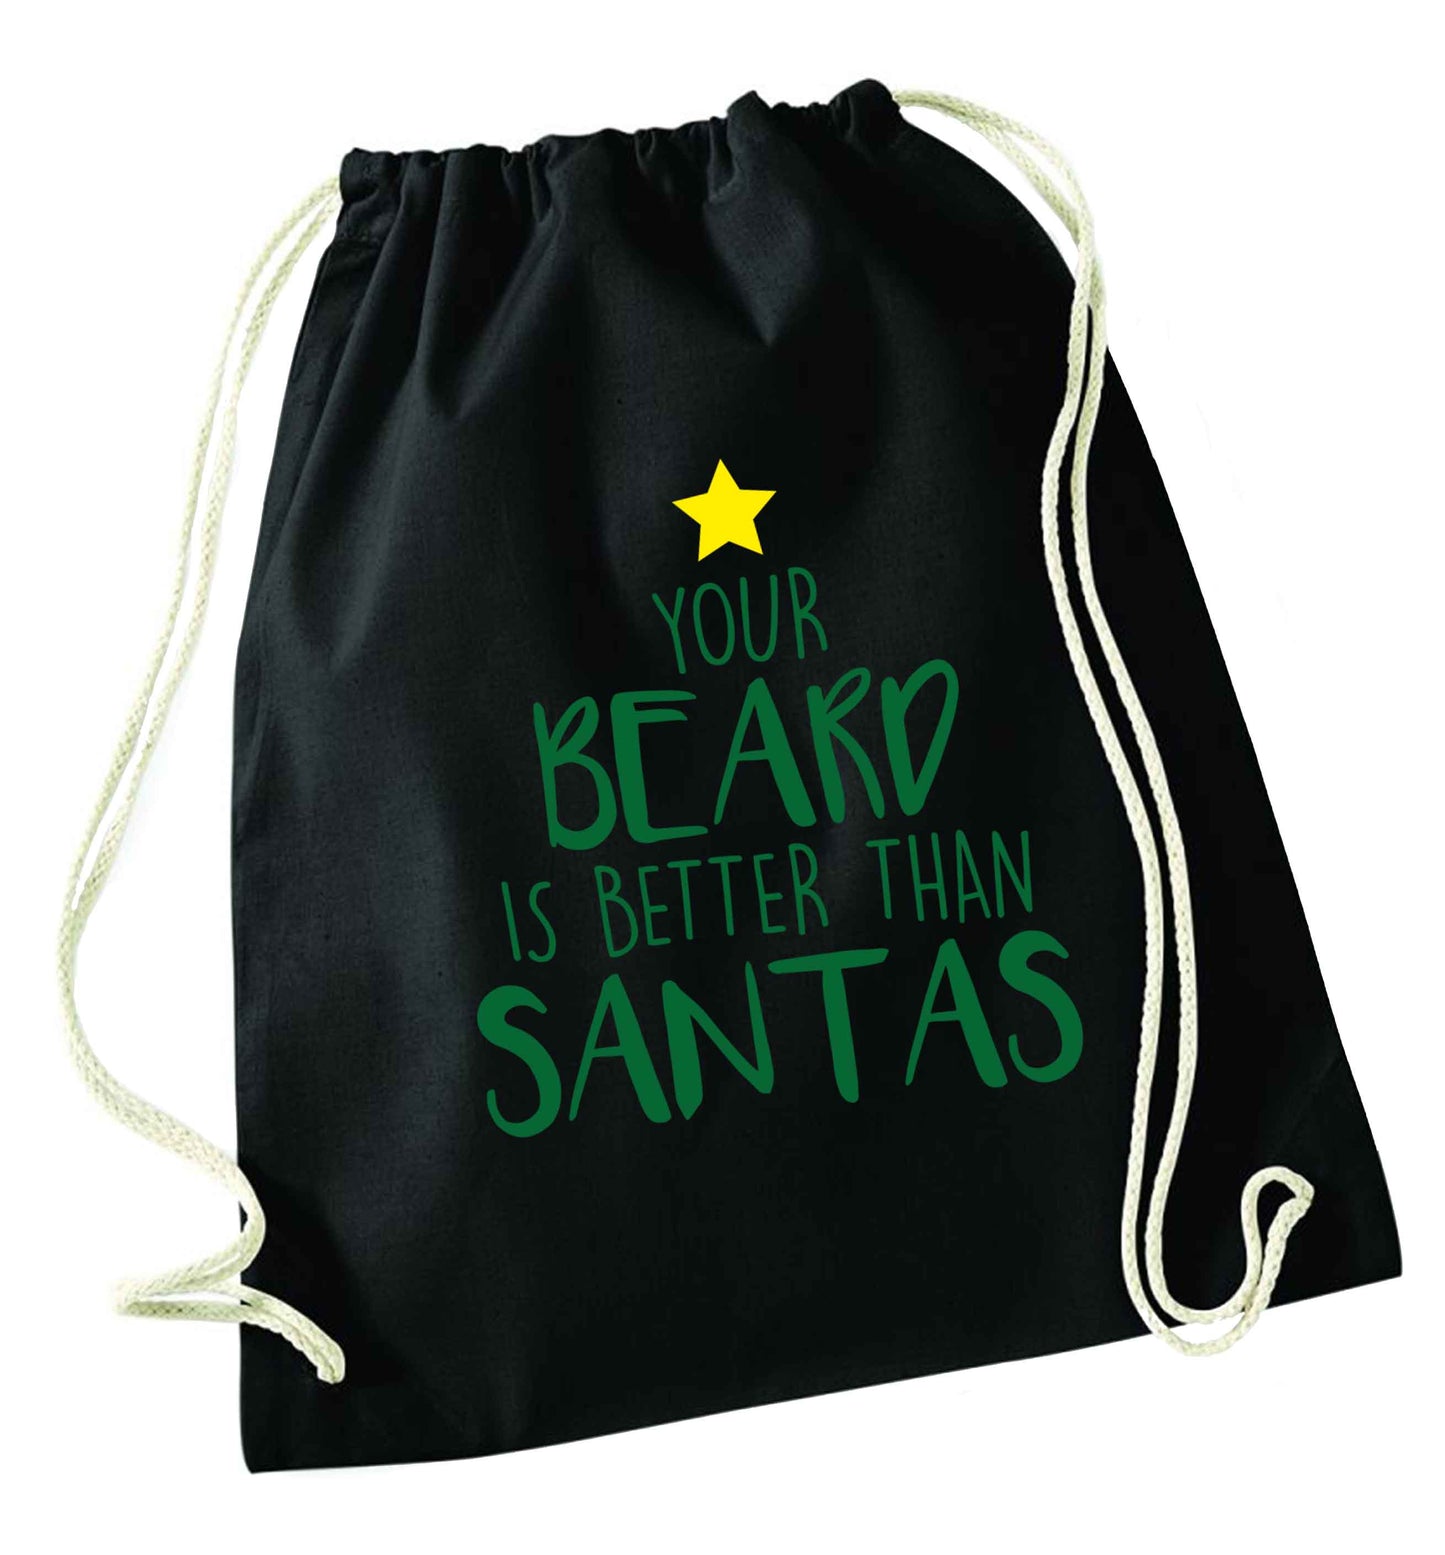 Your Beard Better than Santas black drawstring bag